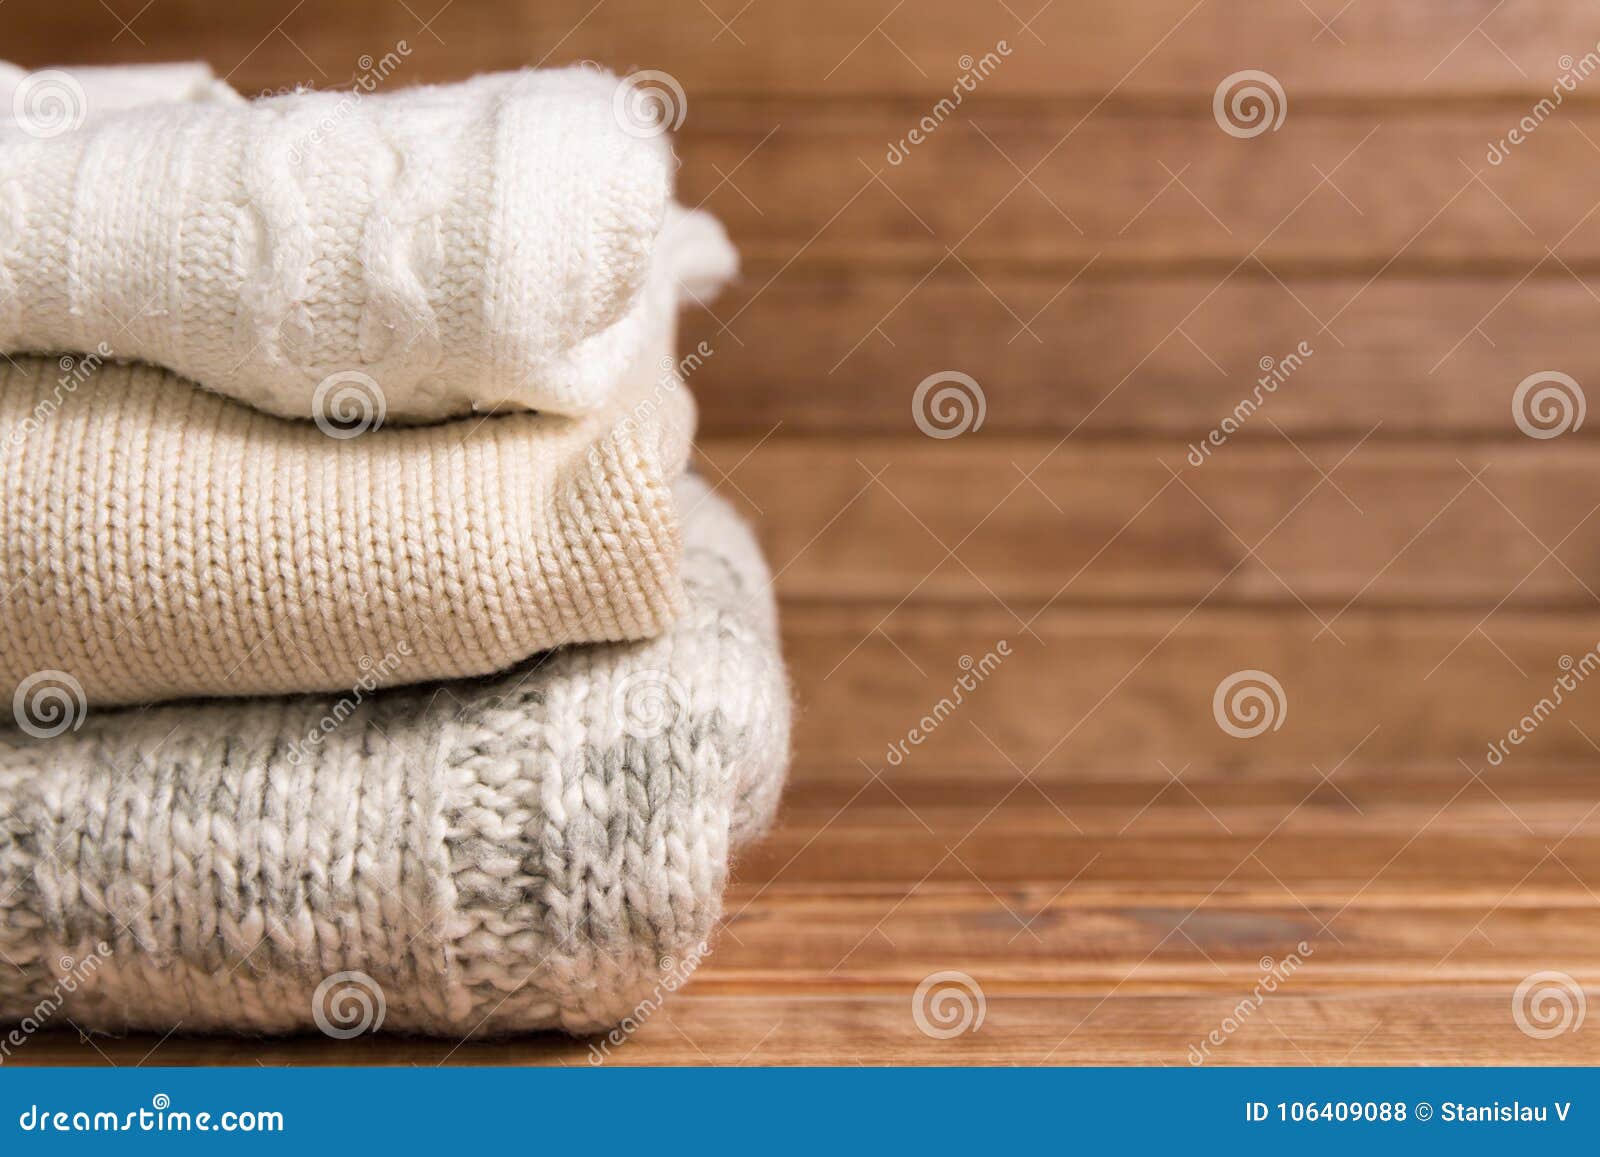 malhas e suéteres femininos